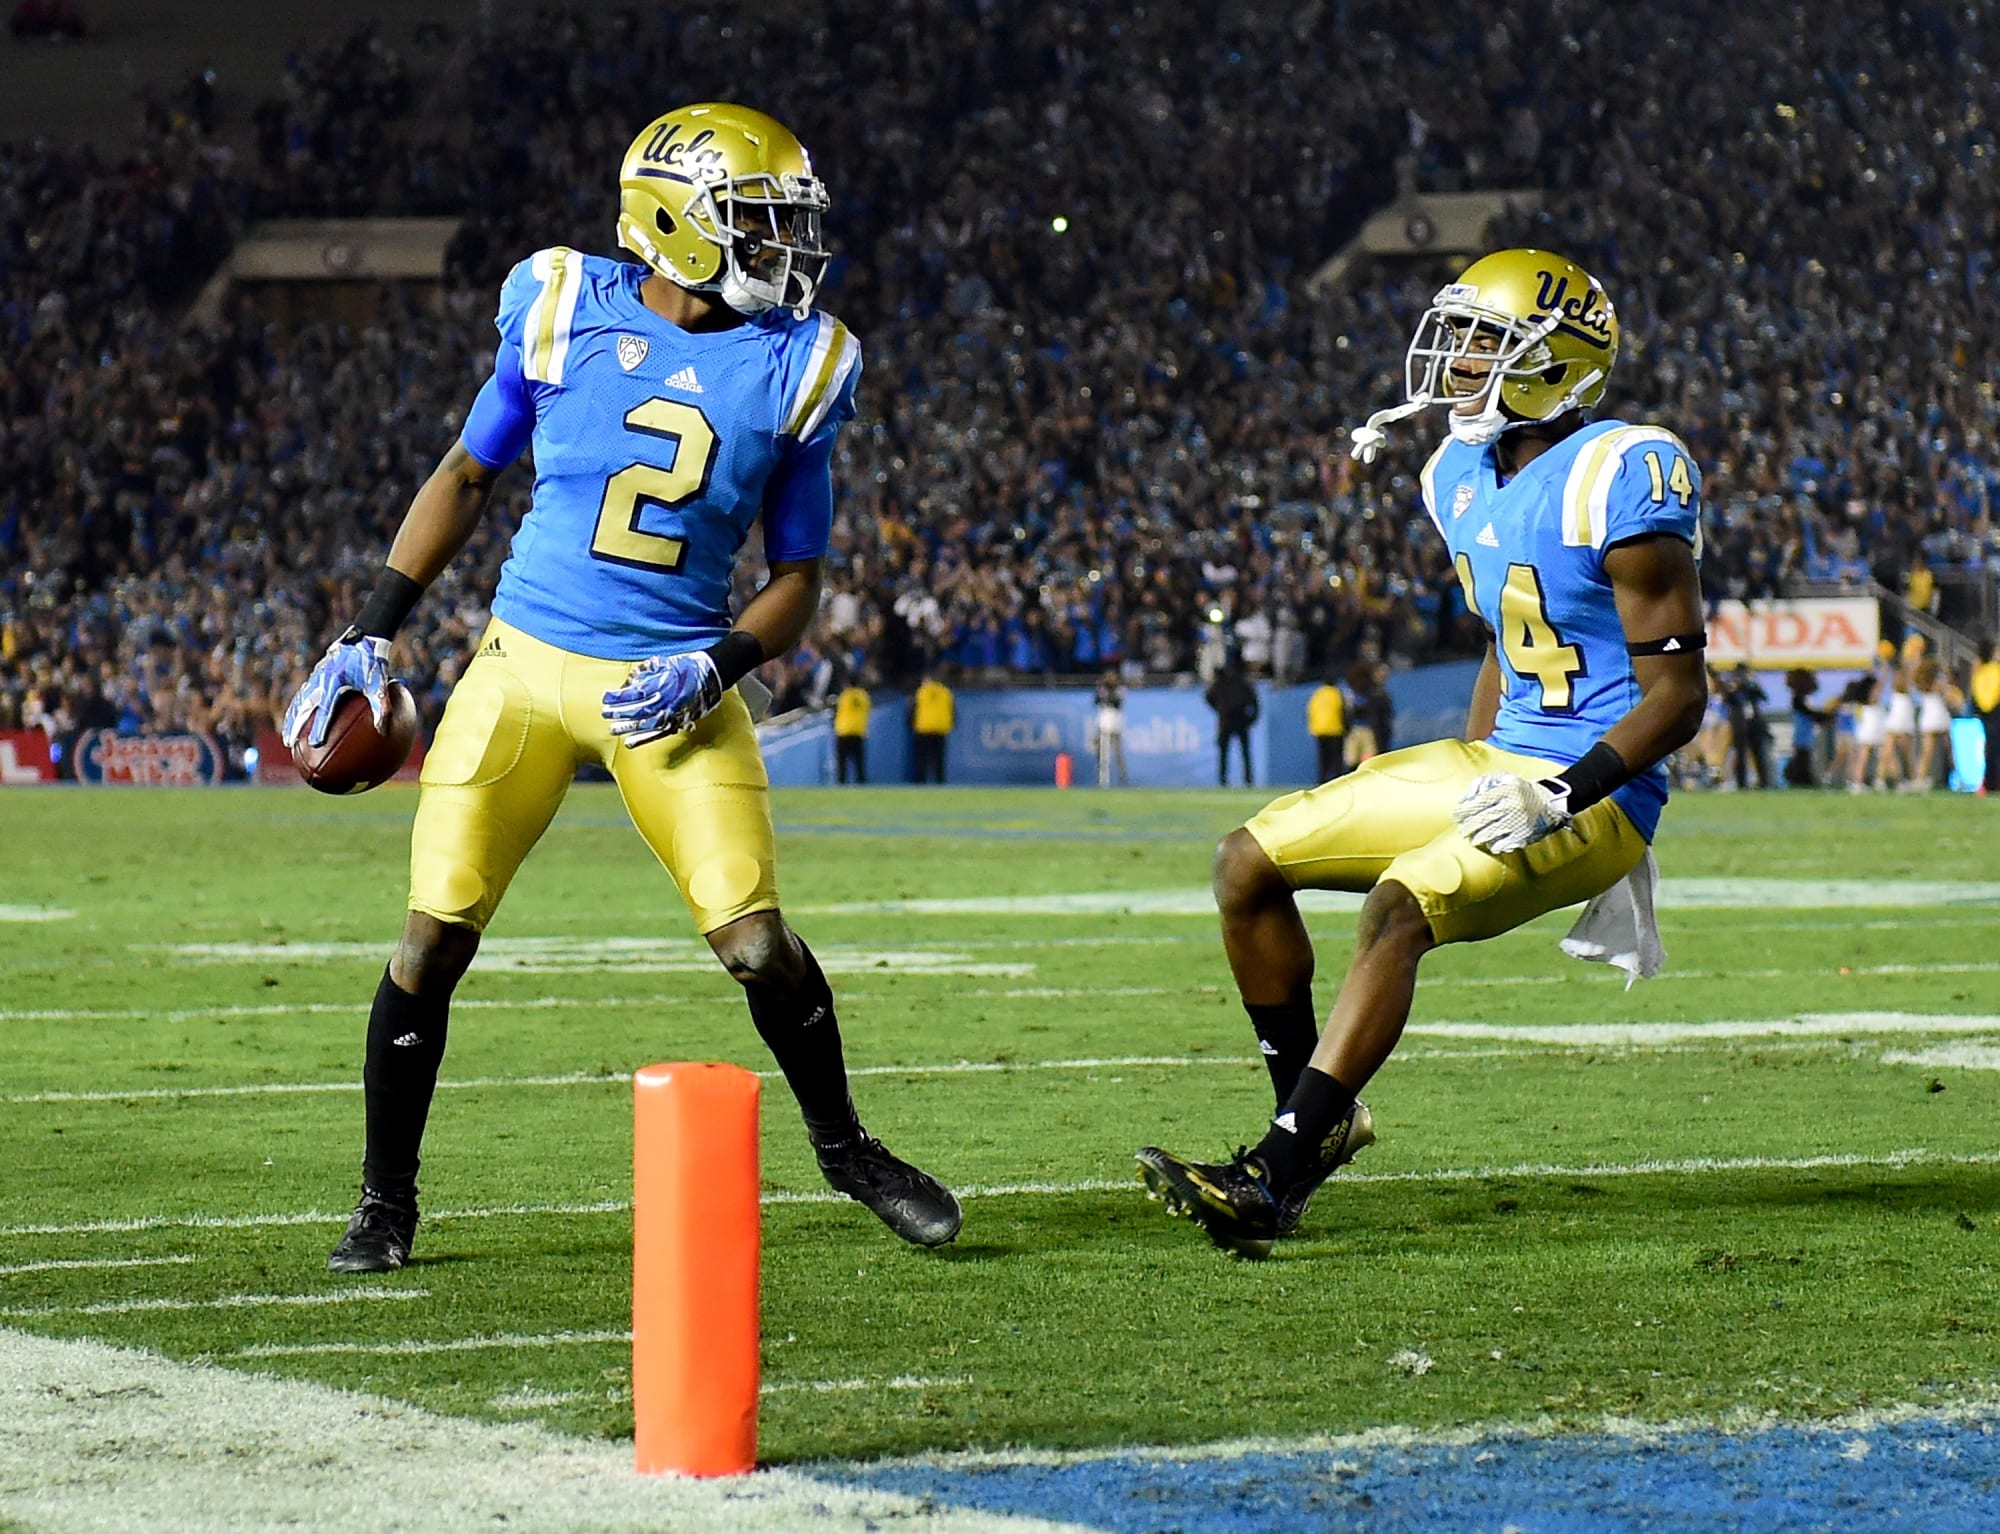 Photos: UCLA Football Jumpman Uniform Review